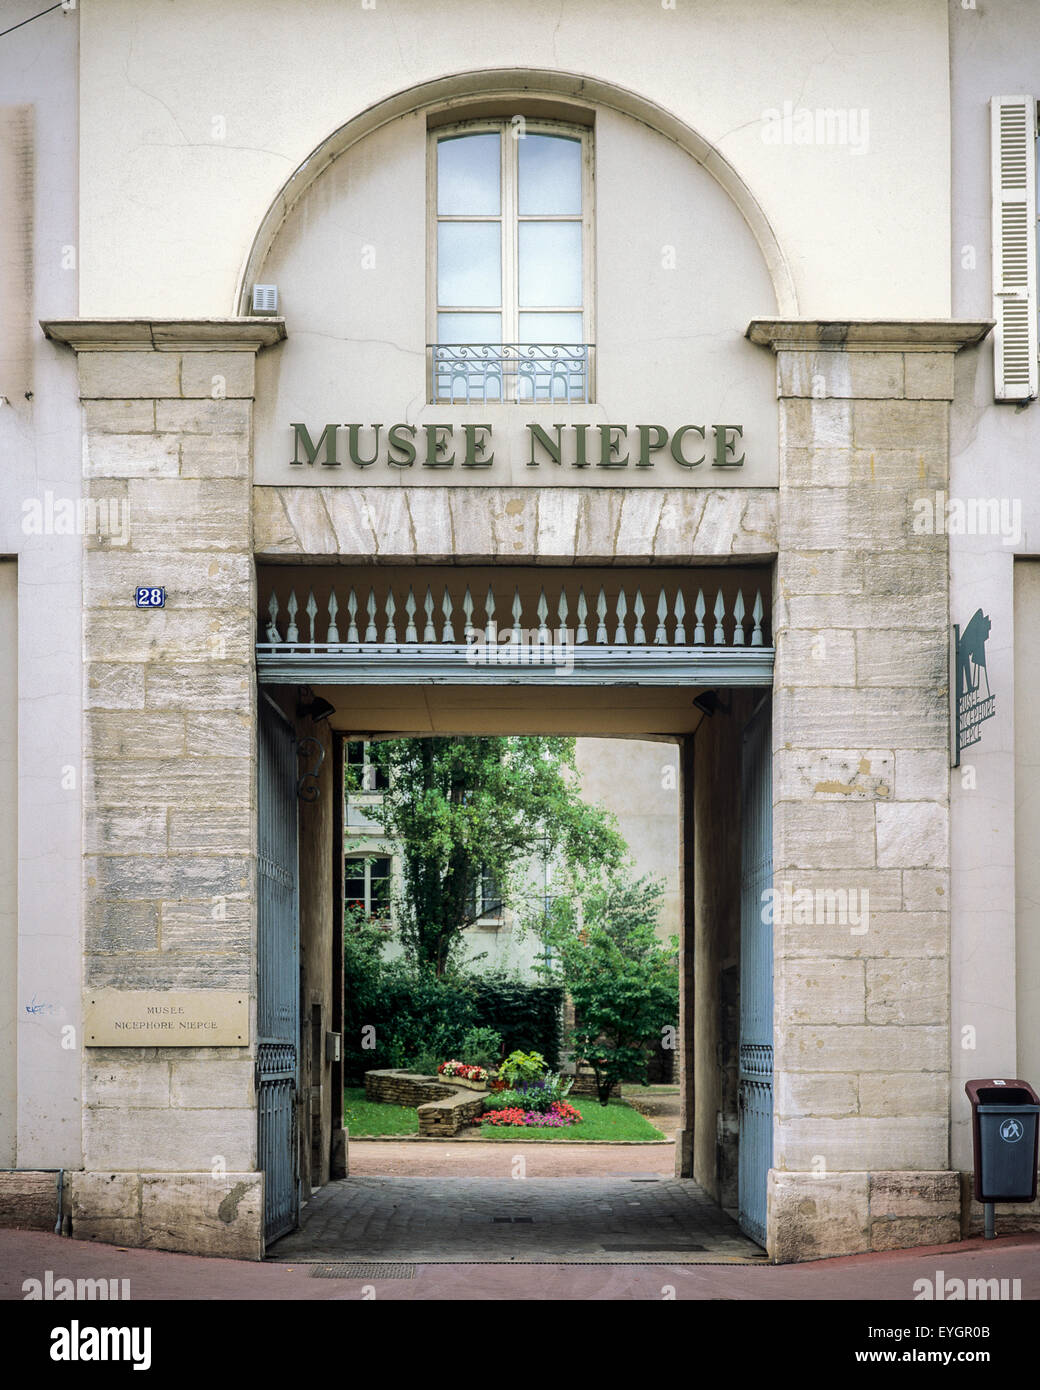 Nicephore Niepce Museum, Chalons-sur-Saône, Saône-et-Loire, Burgund, Frankreich, Europa Stockfoto